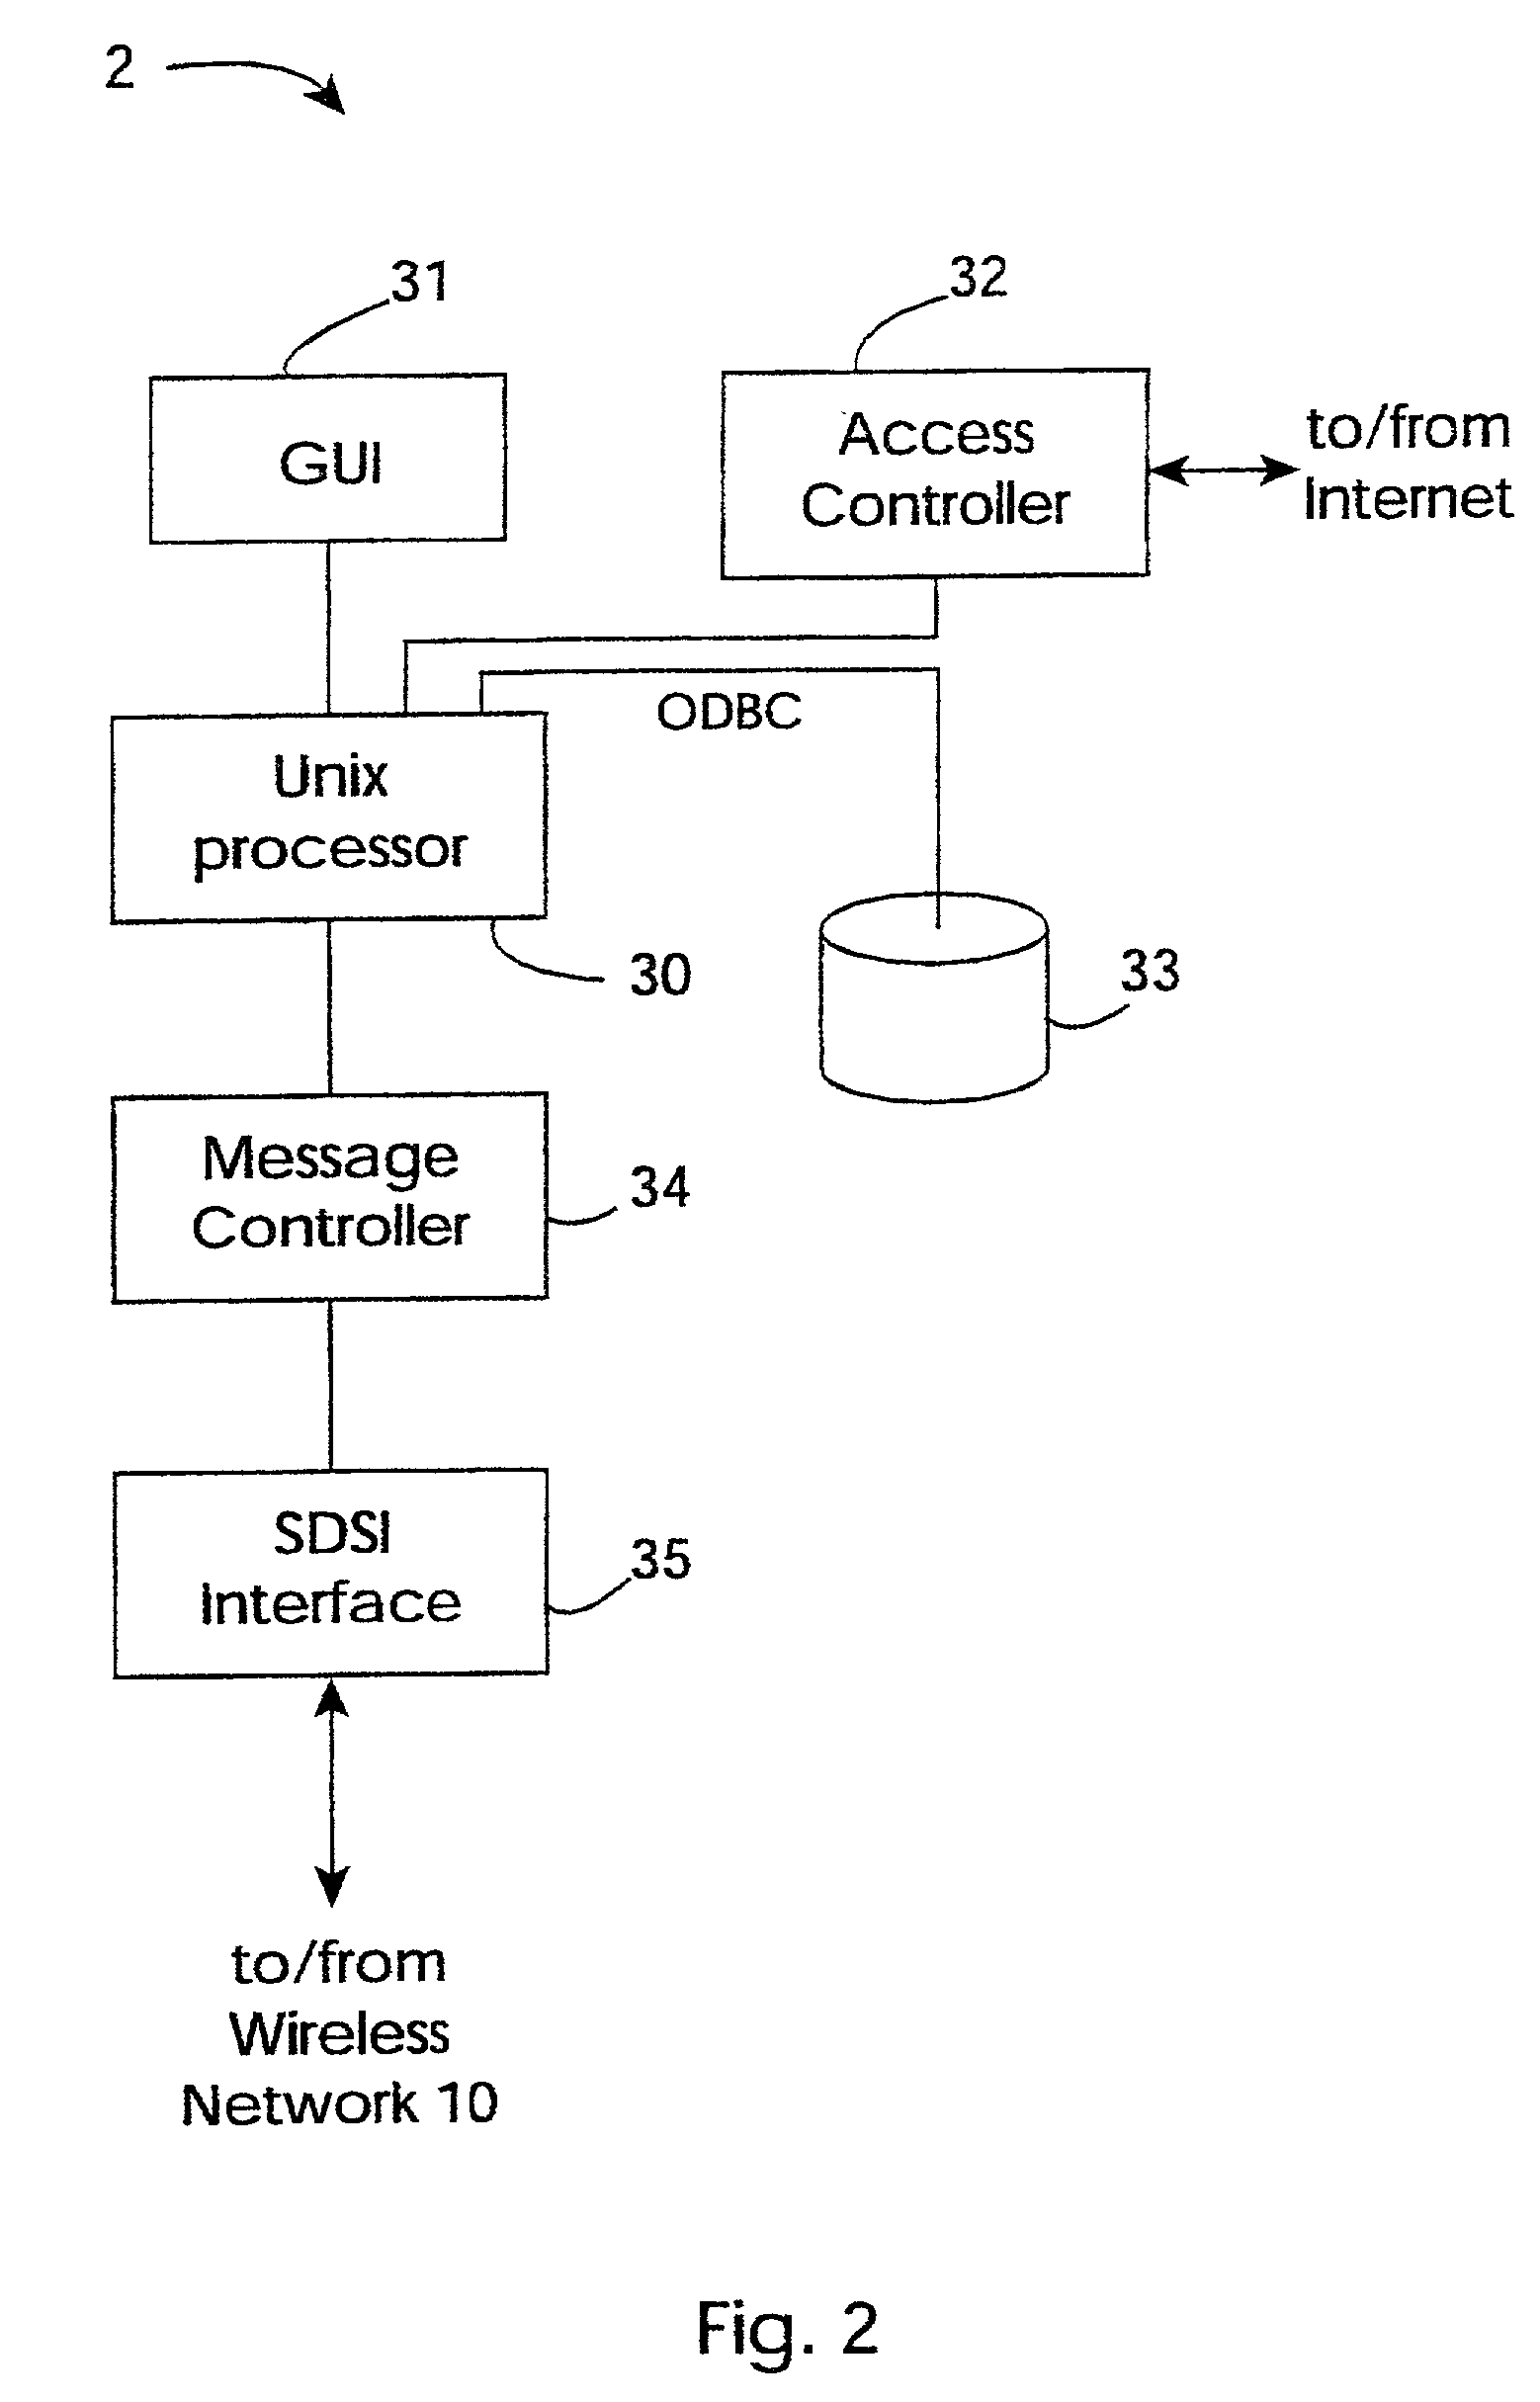 Communication system